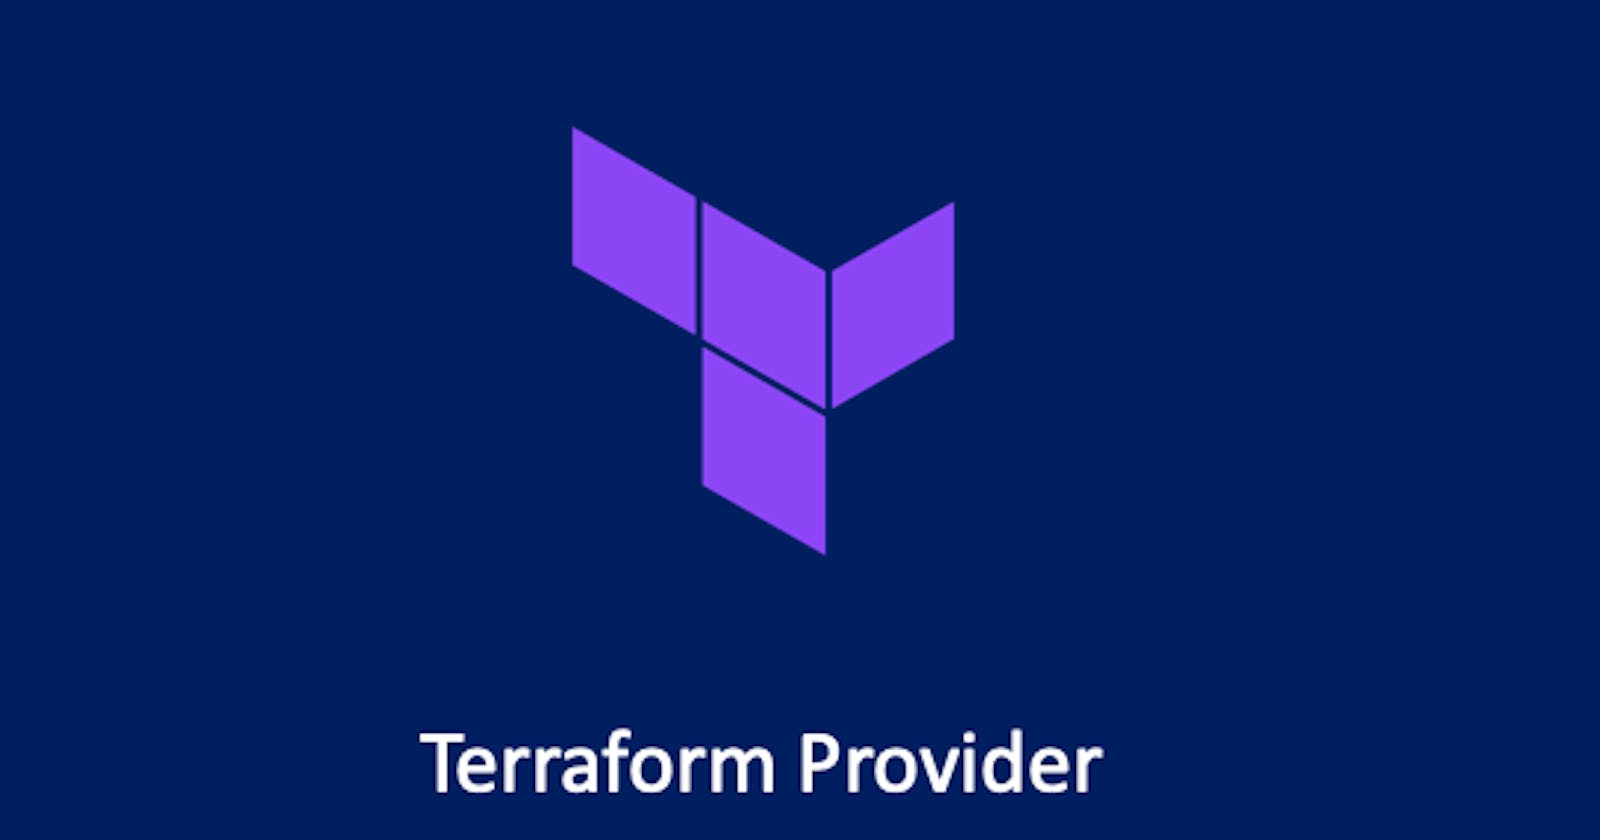 Terraform Providers